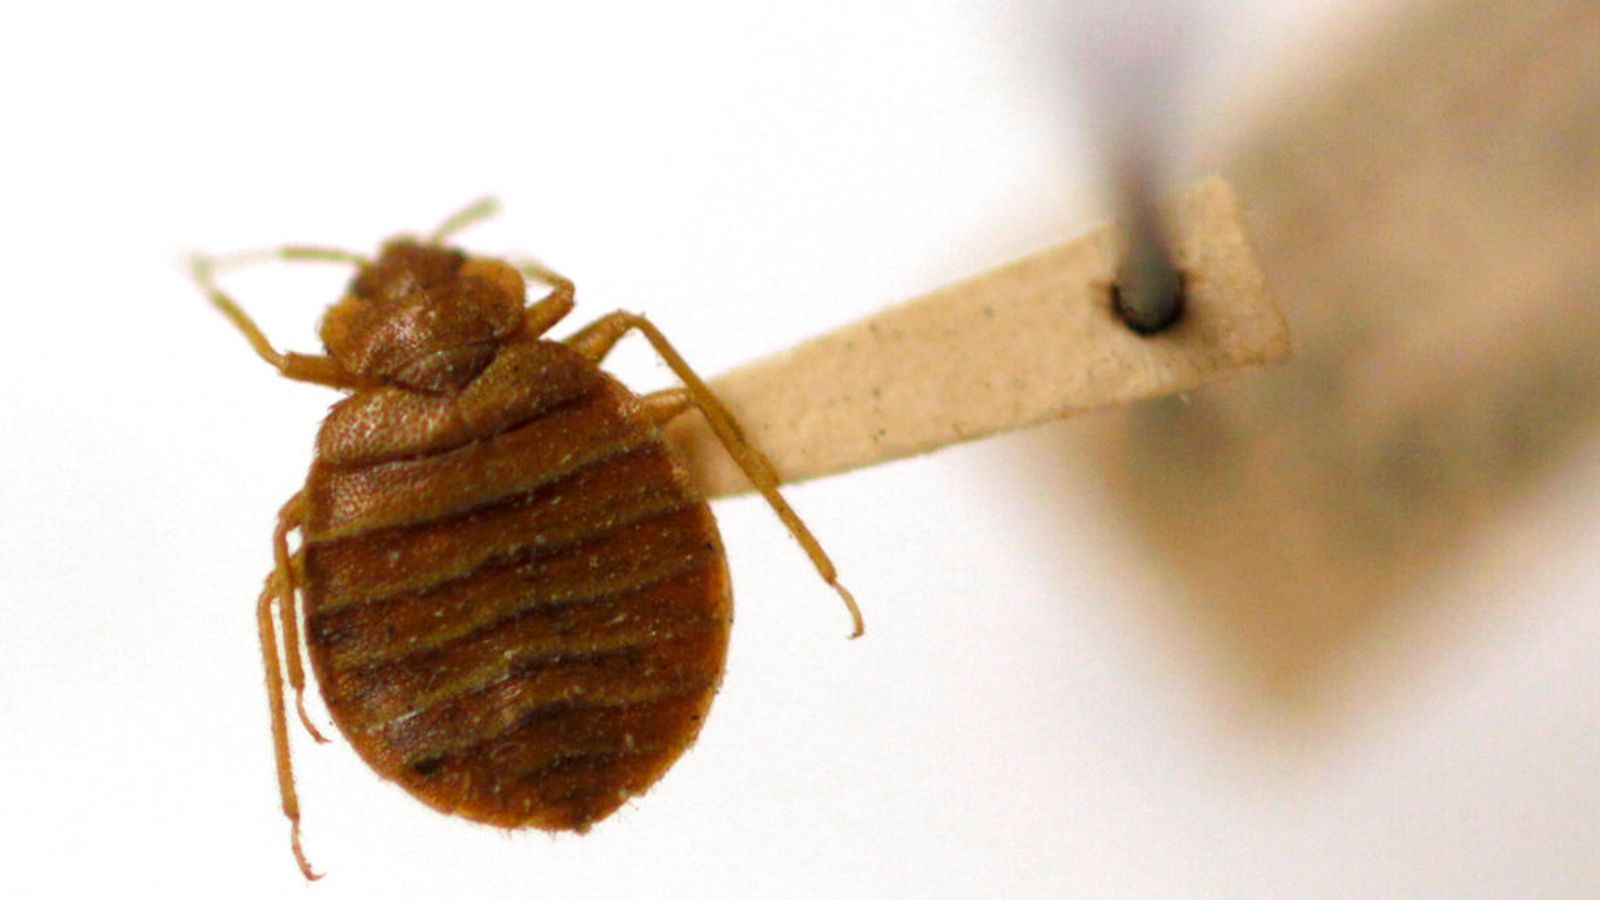 Bedbug hoax targeting tourists in Greece, authorities warn